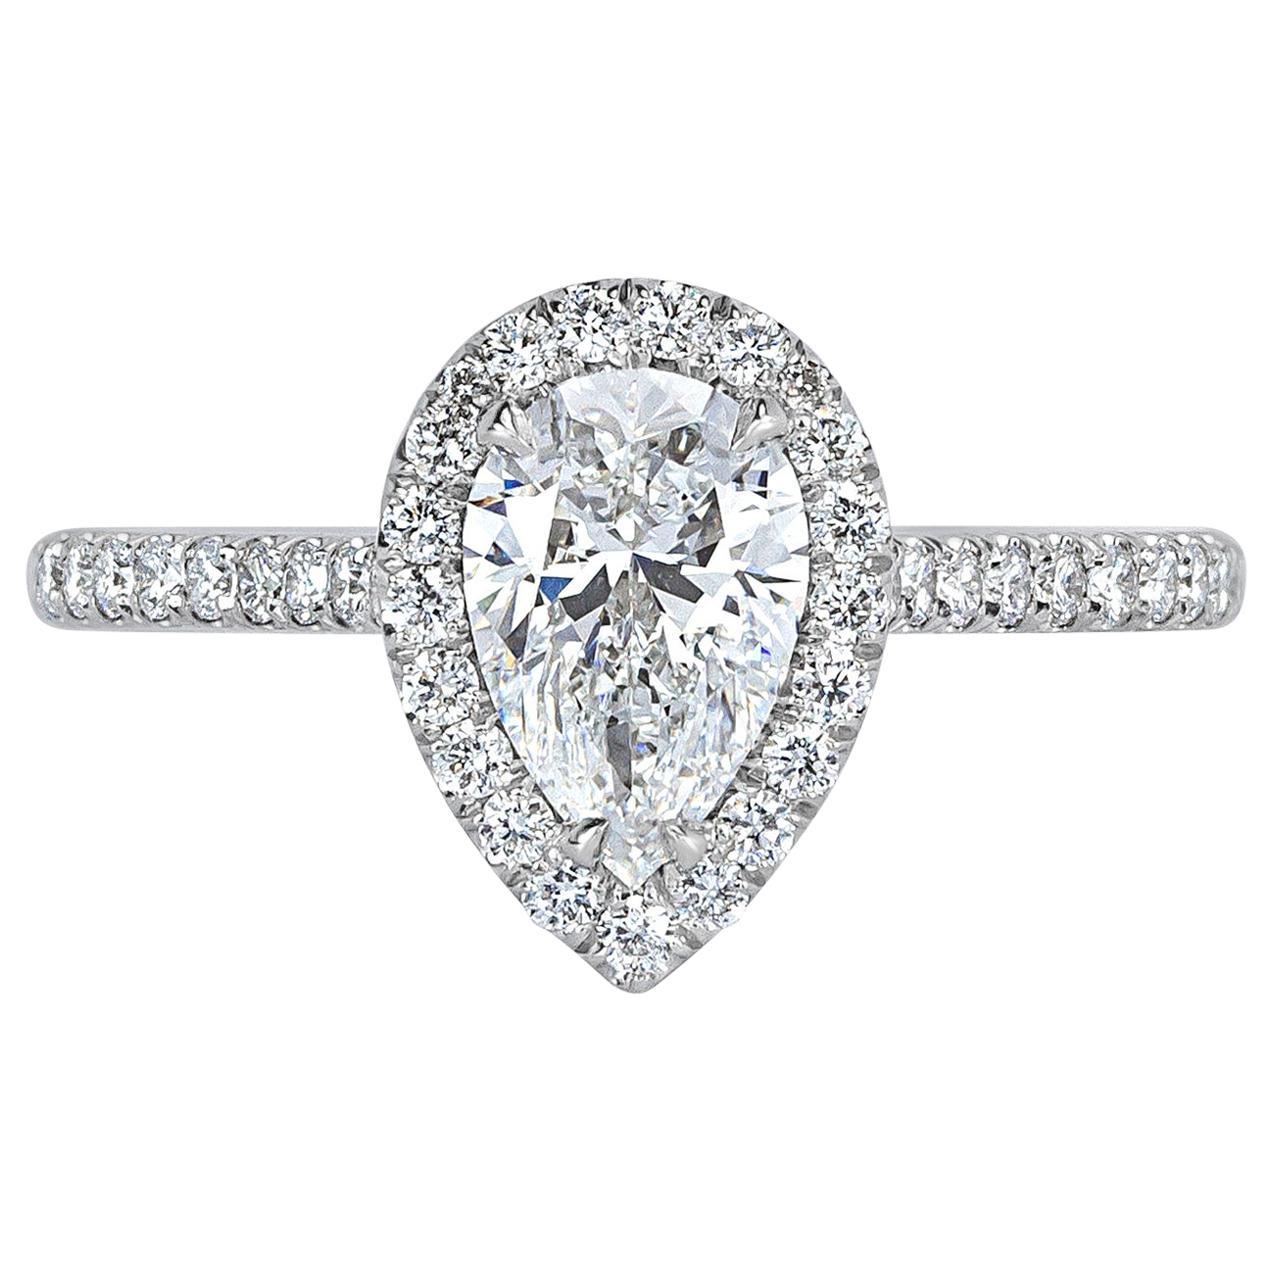 Mark Broumand 1.61 Carat Pear Shaped Diamond Engagement Ring